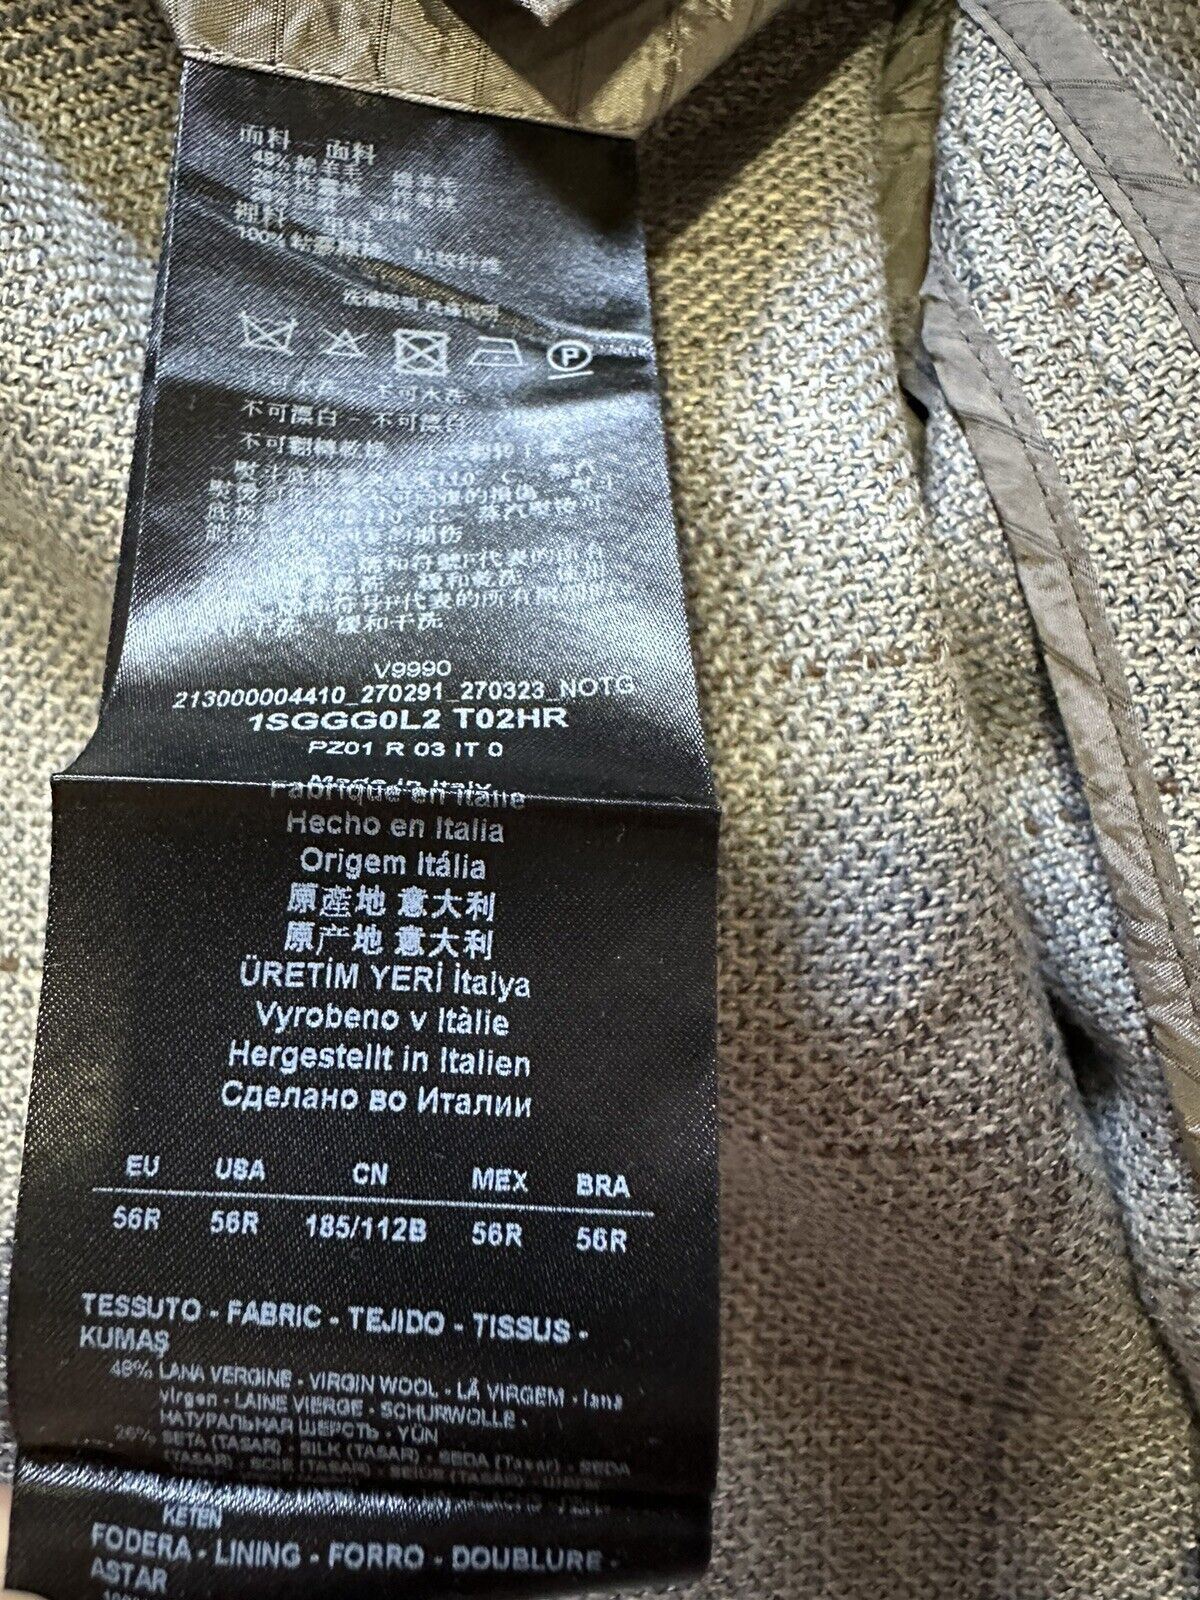 СЗТ $2995 Giorgio Armani Мужская спортивная куртка Блейзер Серый 46R США/56R ЕС Италия